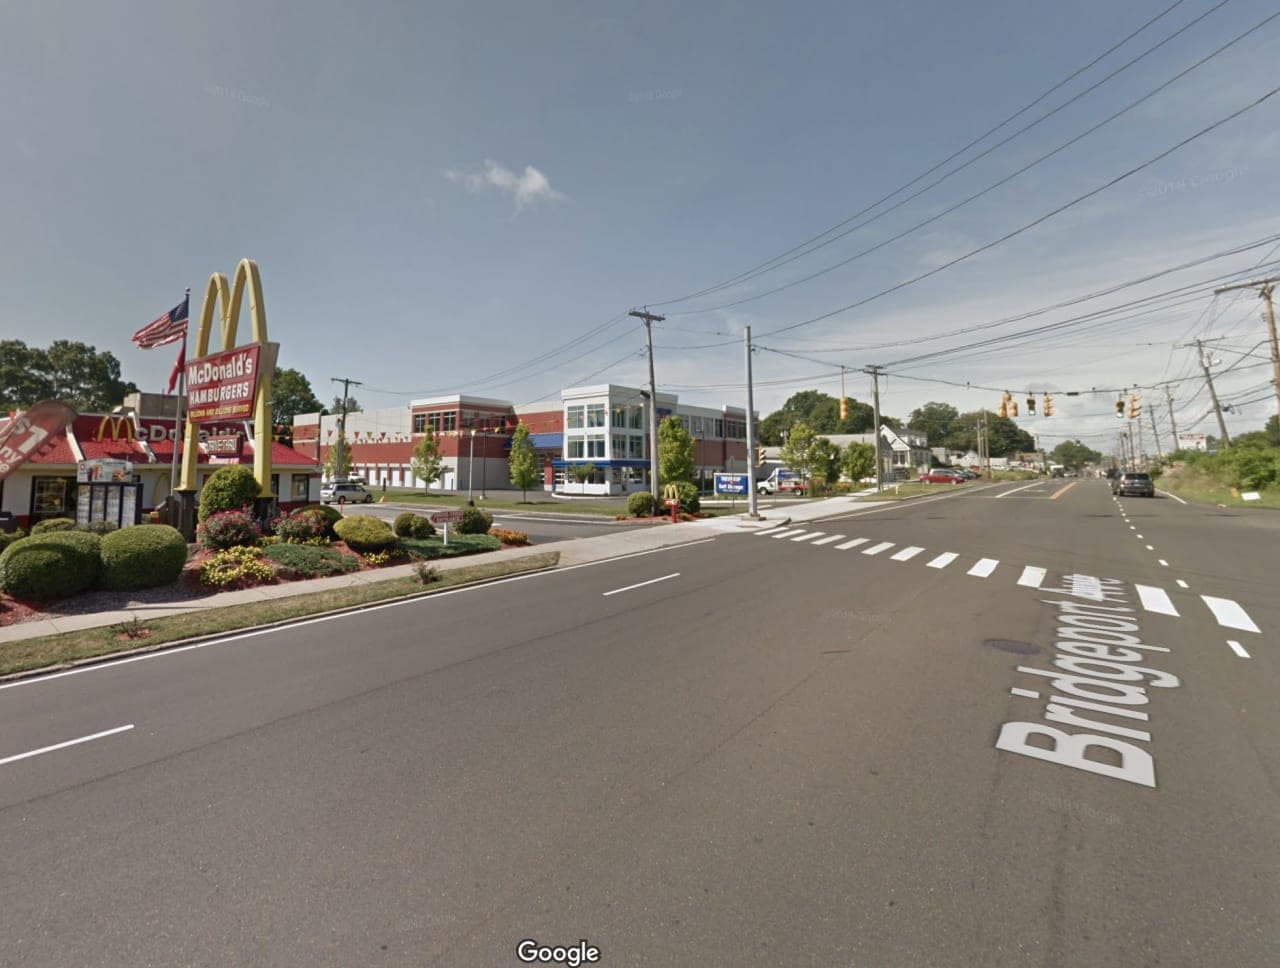 McDonald's in Milford.